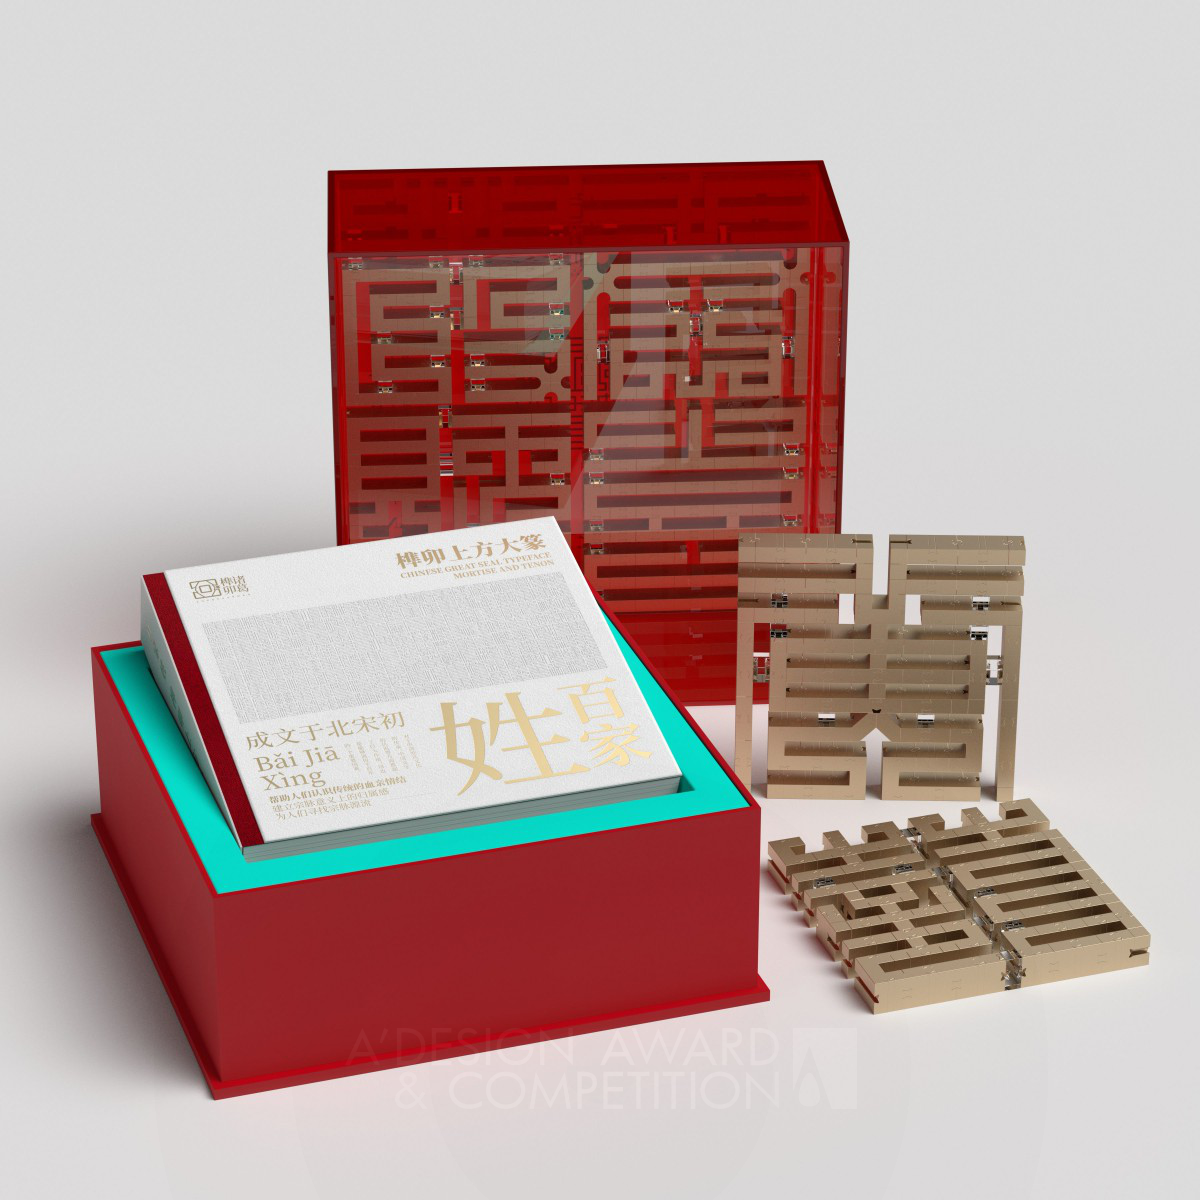 Shangfang Large Seal Script Building Block Packaging